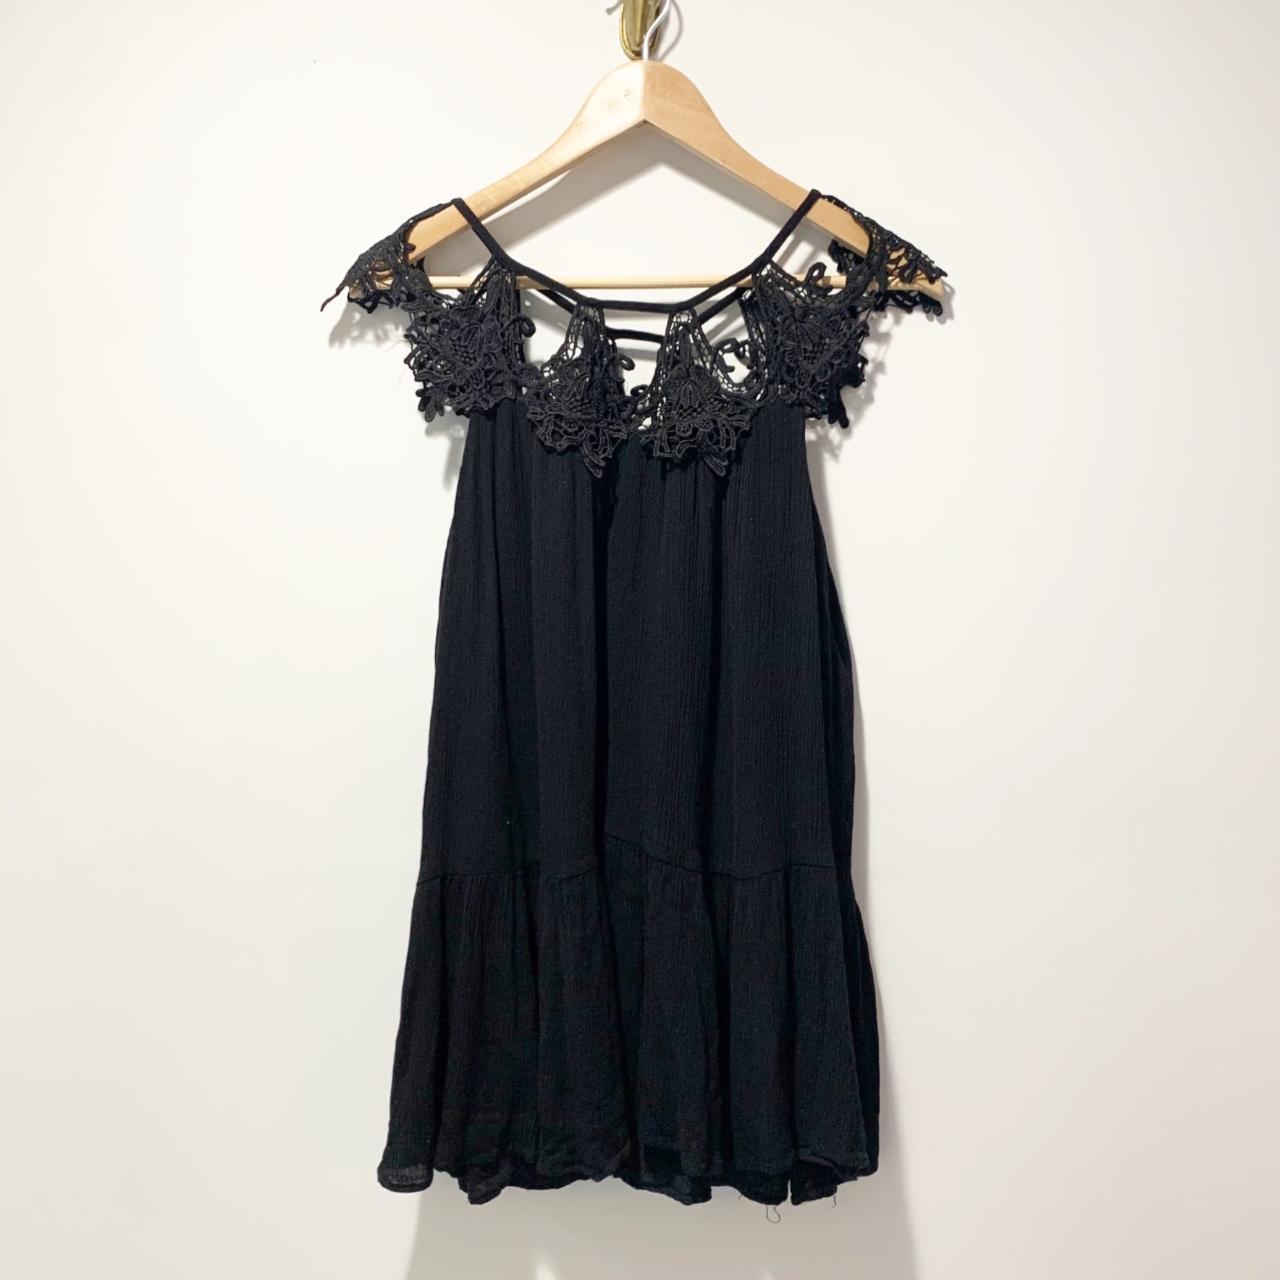 Remarkable Black Sheer Lace Short Sleeve Mini Dress